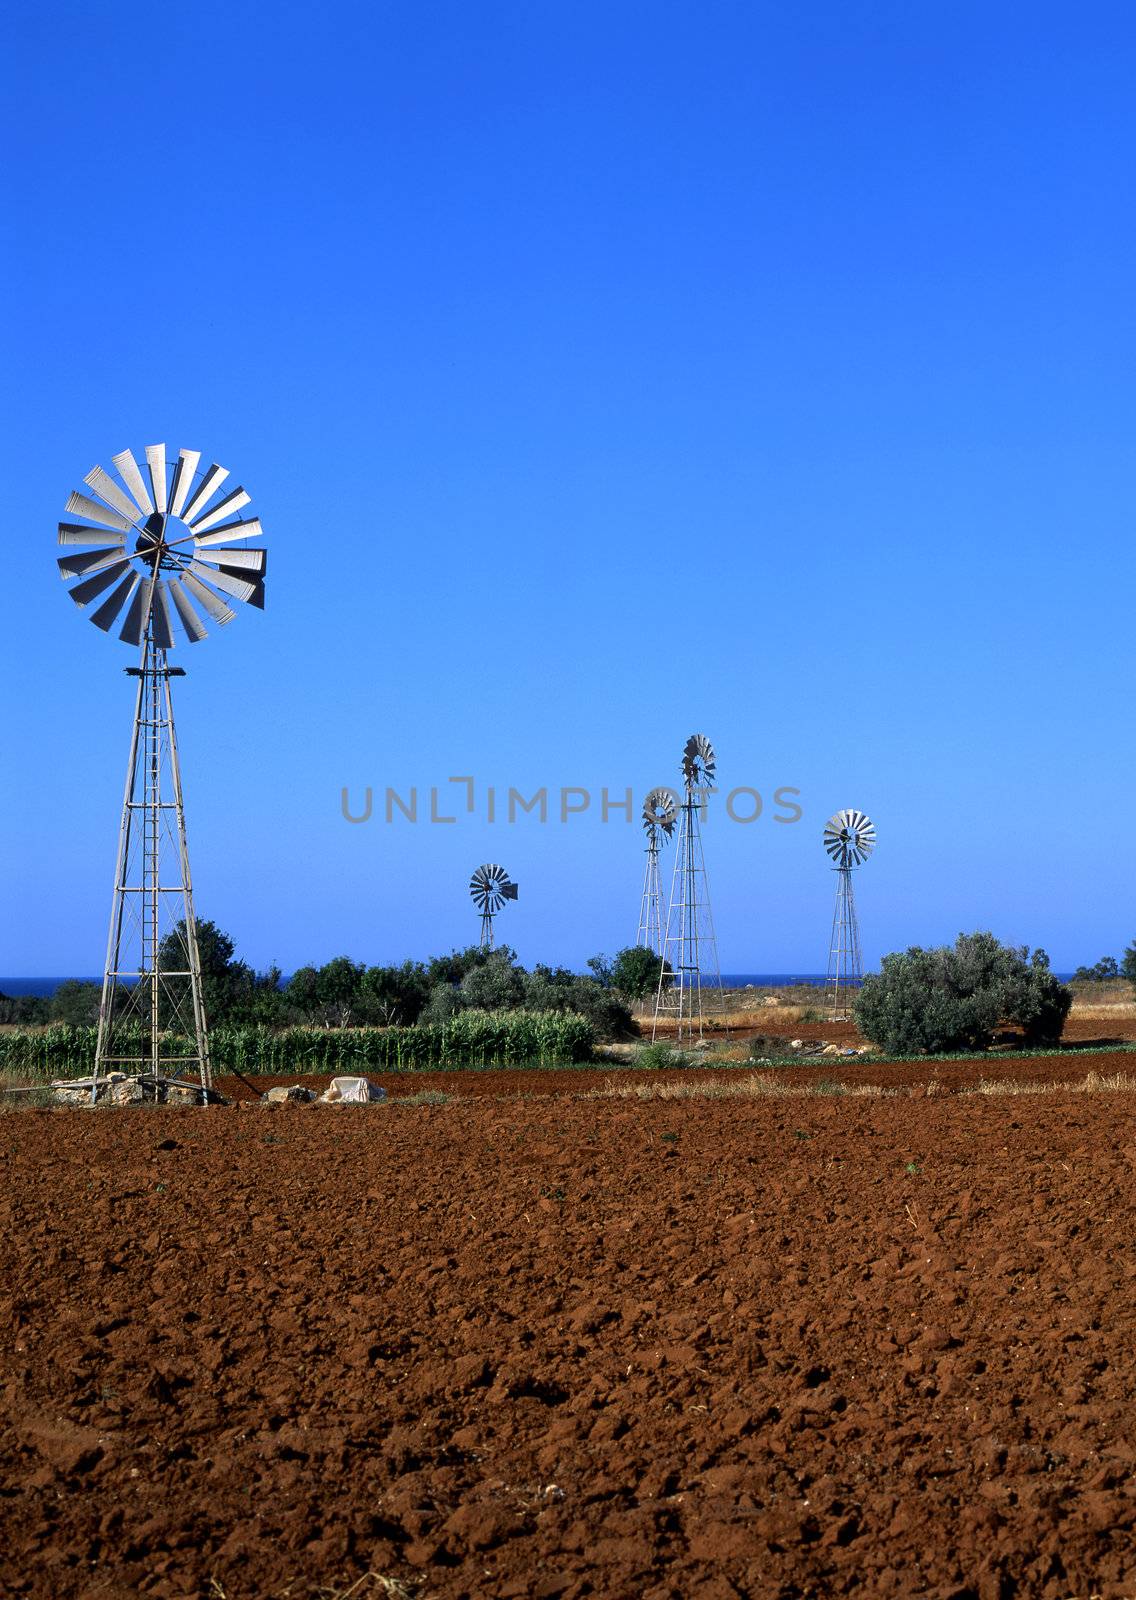 Irrigation windmills pumping water for farmland in Cyprus